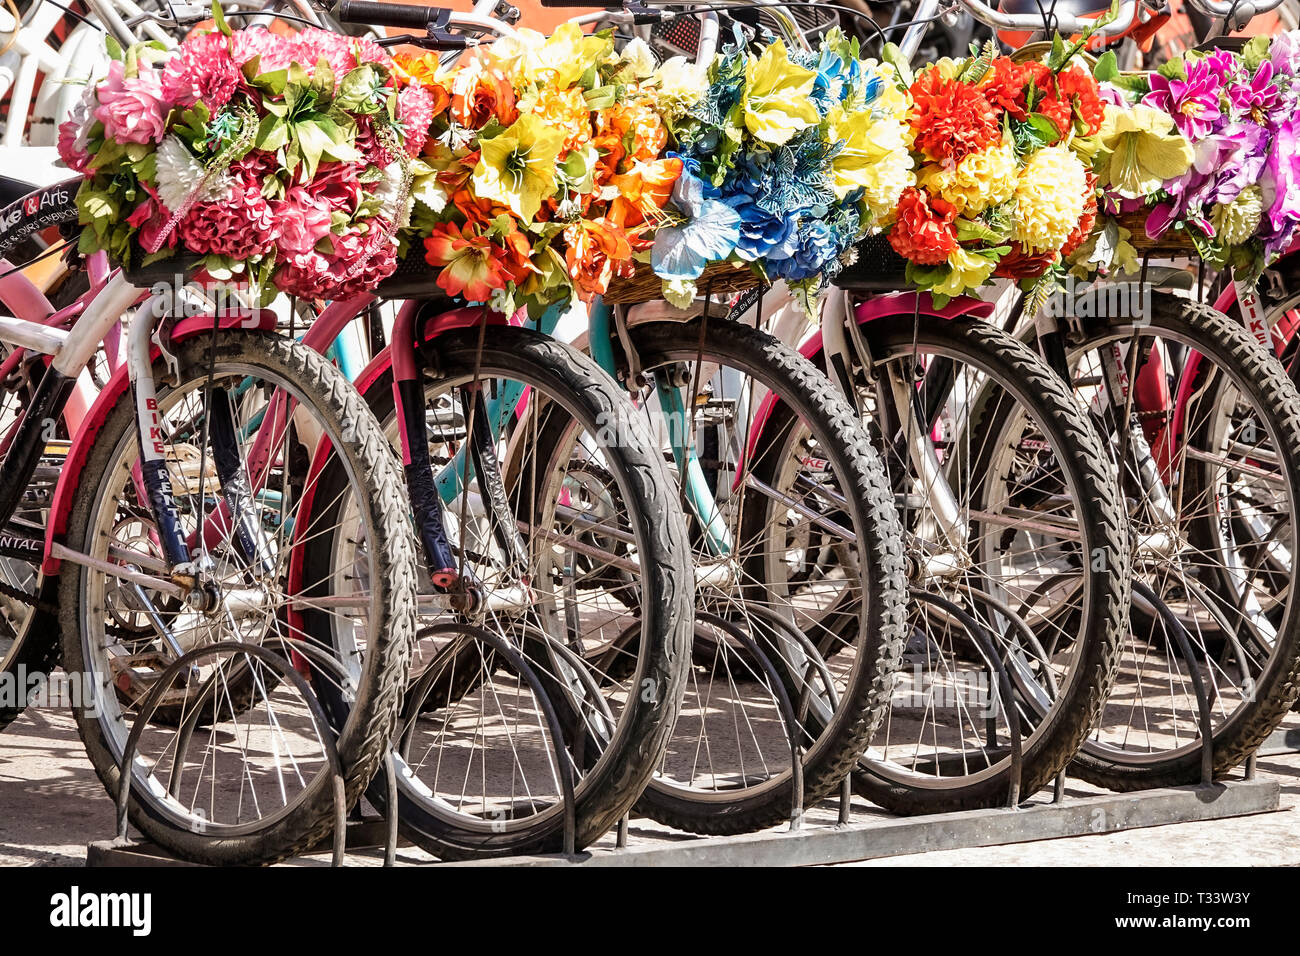 Cartagena Colombia,Center,centre,Getsemani,rental bicycles,decorative flower baskets,wheel,COL190121041 Stock Photo